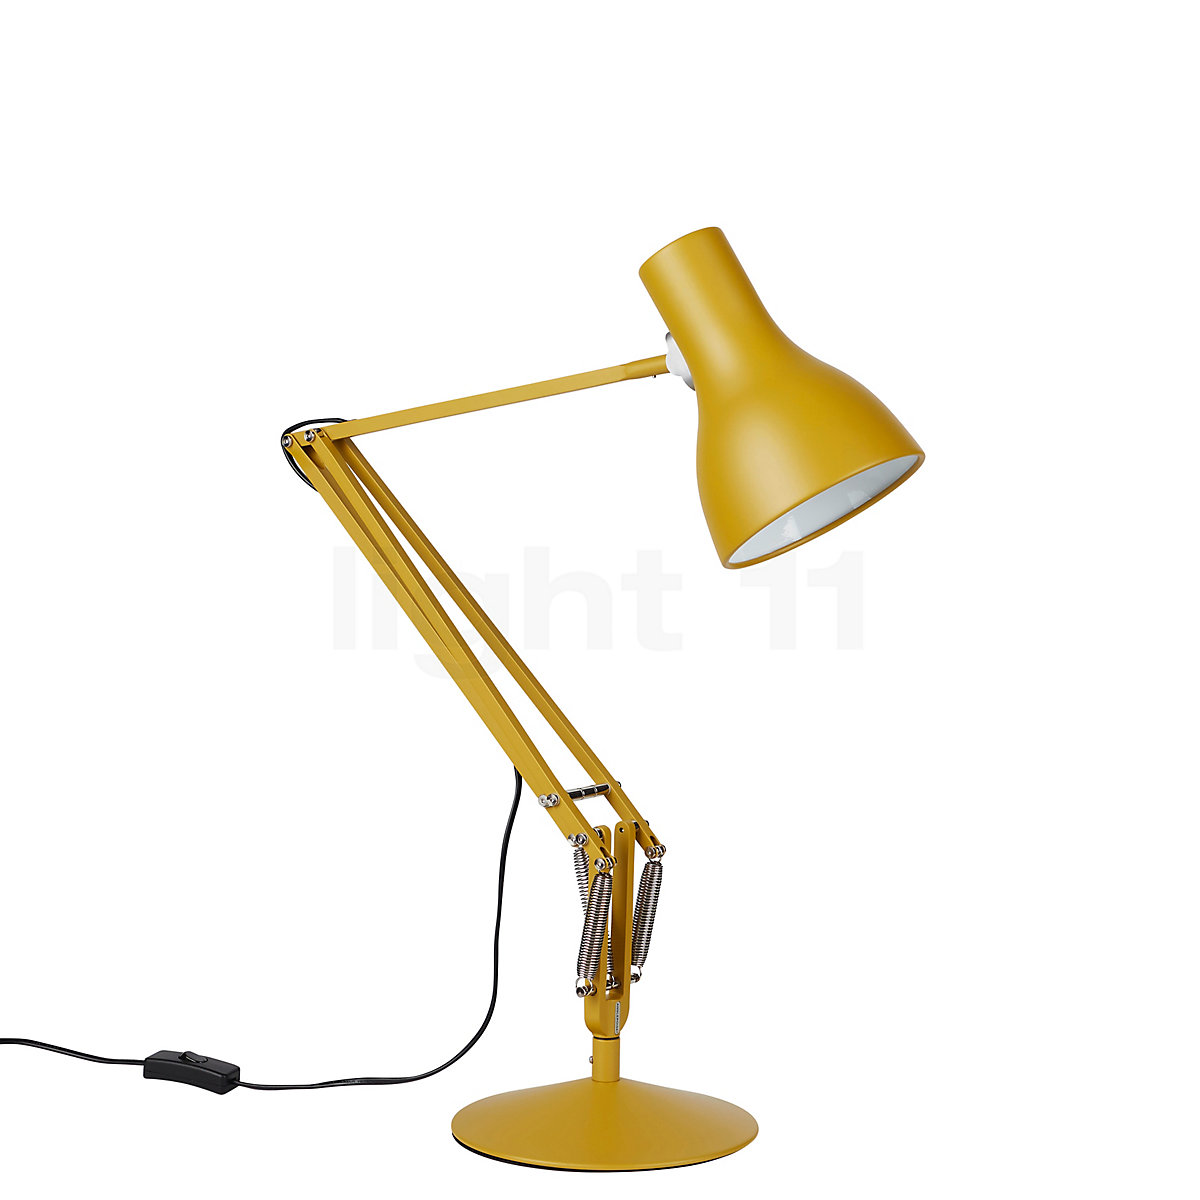 Anglepoise Type 75 Margaret Howell Table lamp at light11.eu